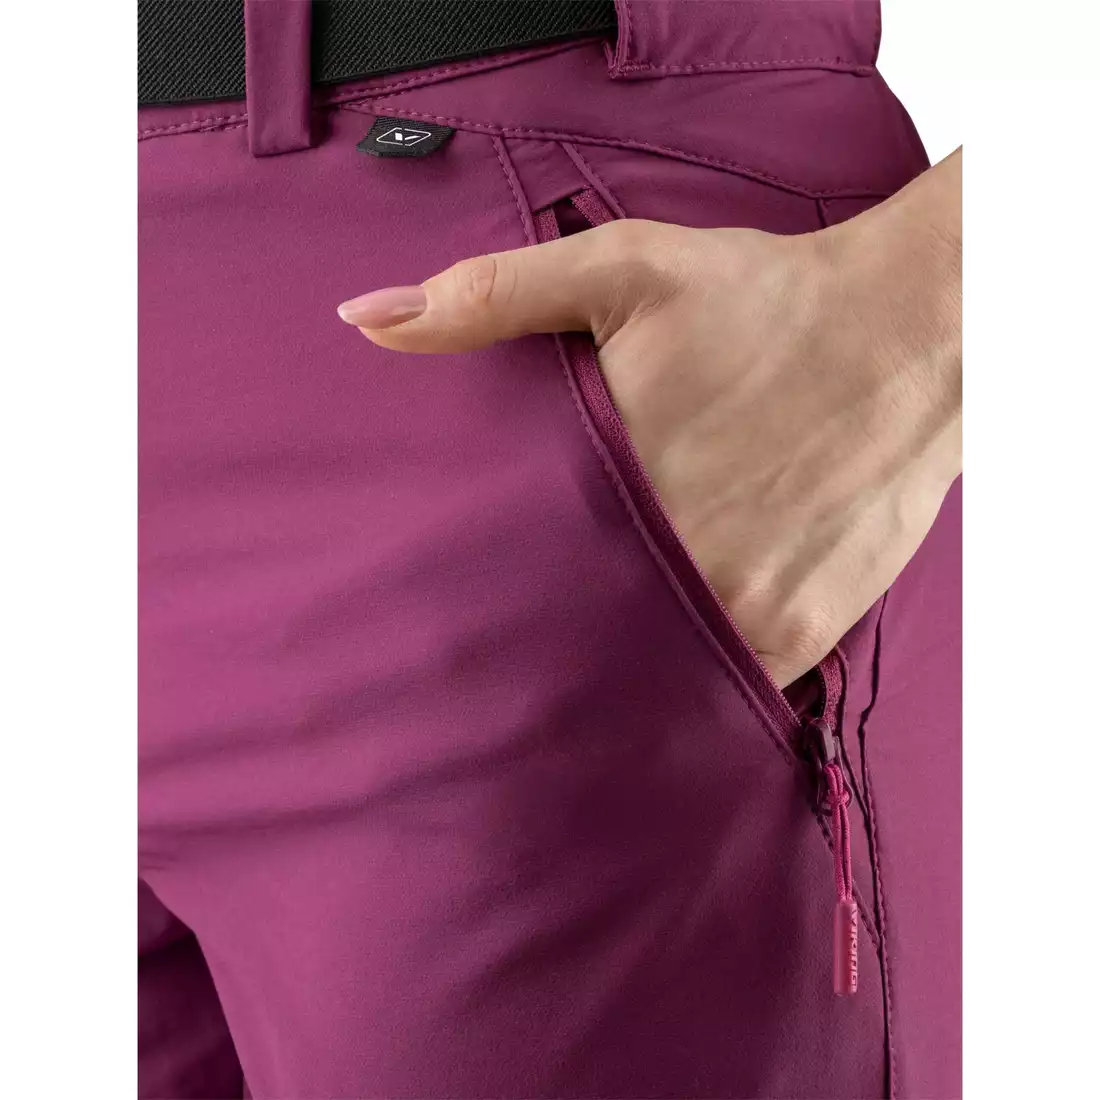 VIKING Damen-Sporthose, Trekkinghose, Expander Lady 900/23/2409/4600 Violett